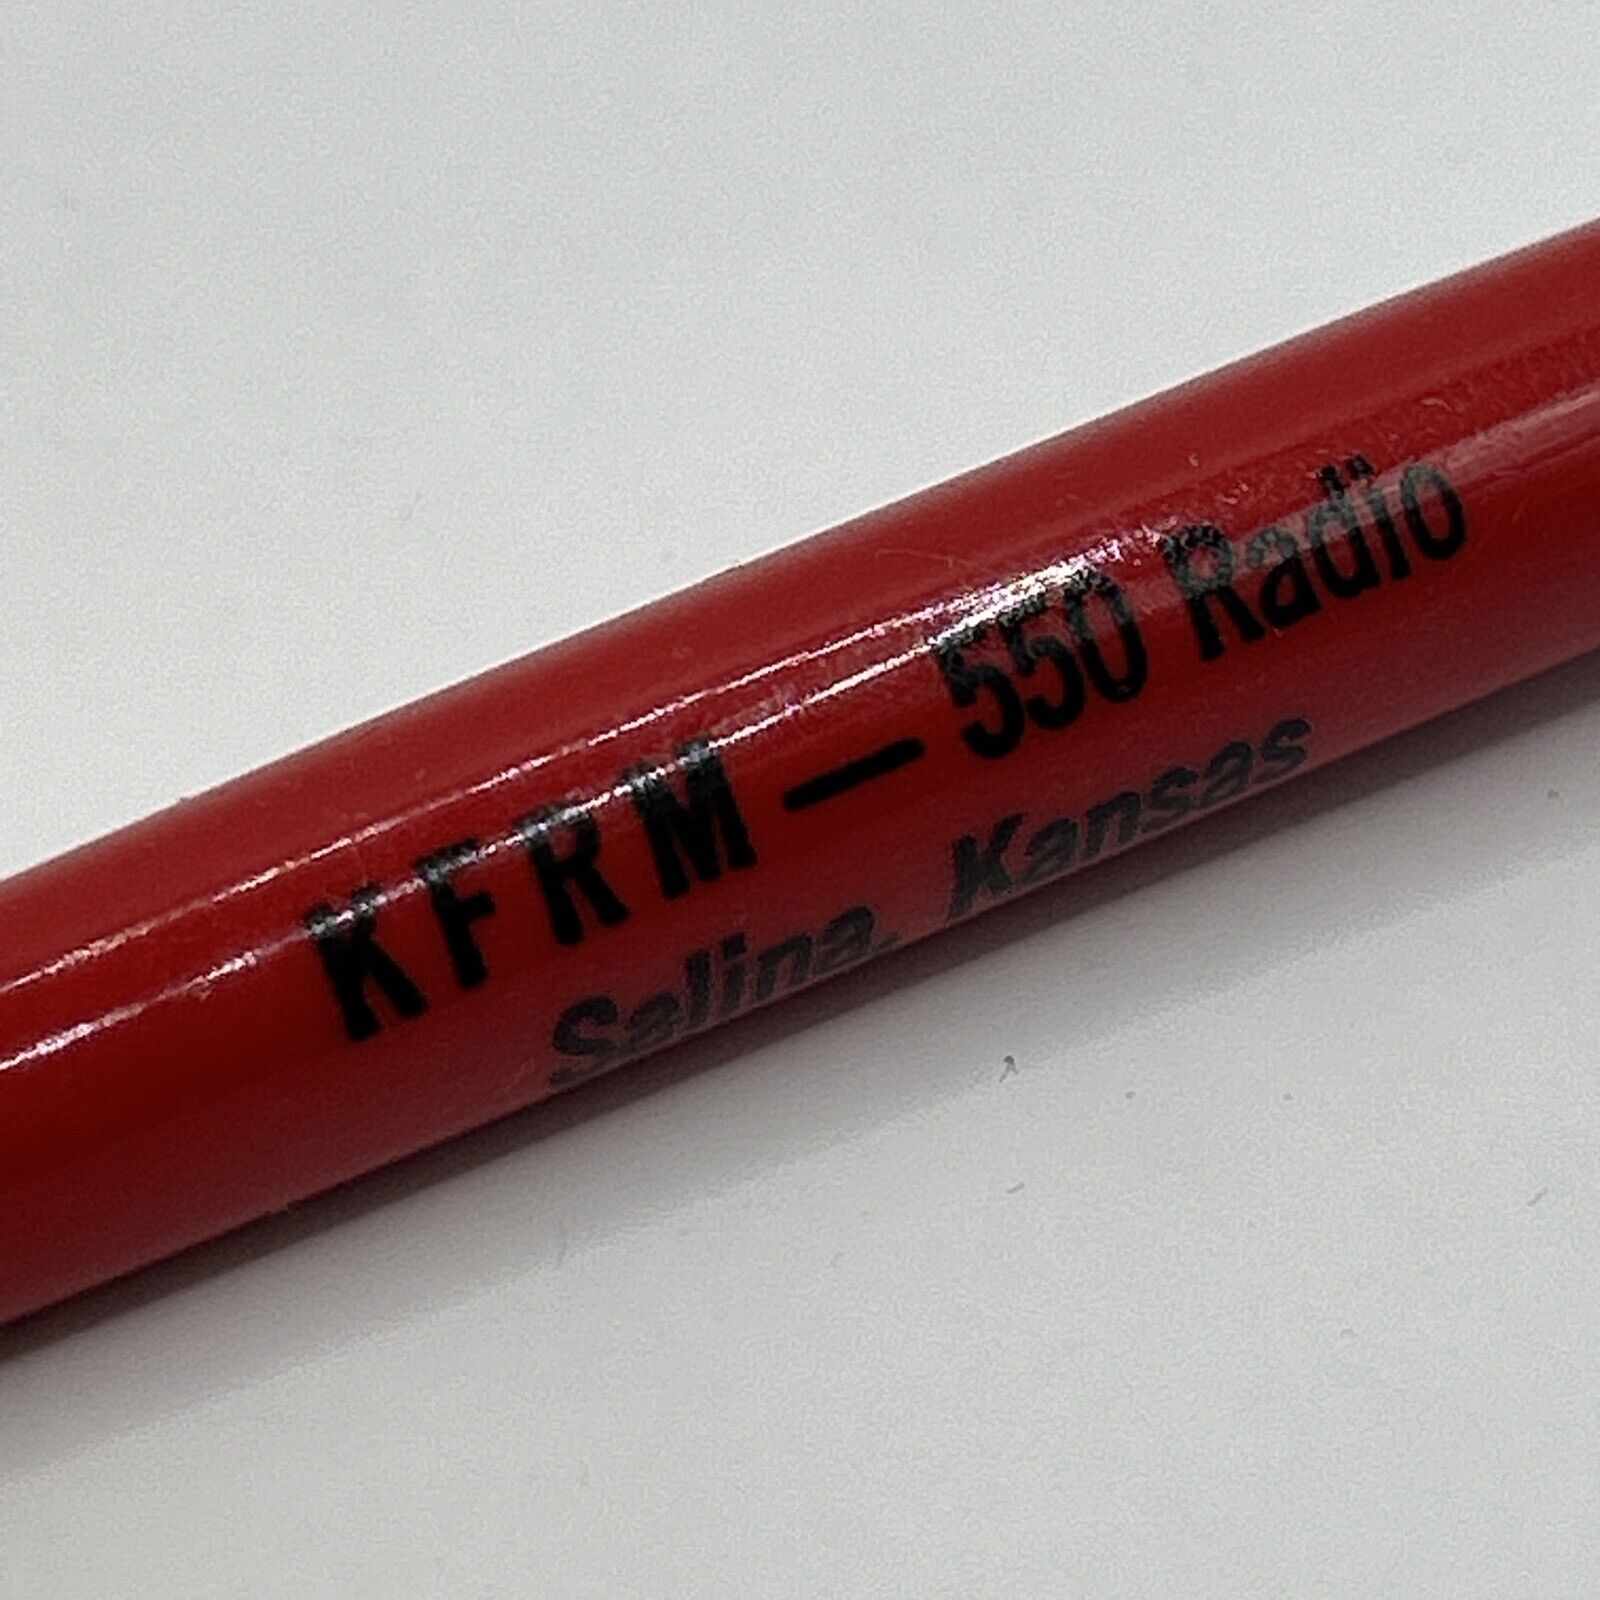 VTG Lindy Ballpoint Pen KFRM AM 550 Radio Salina Kansas